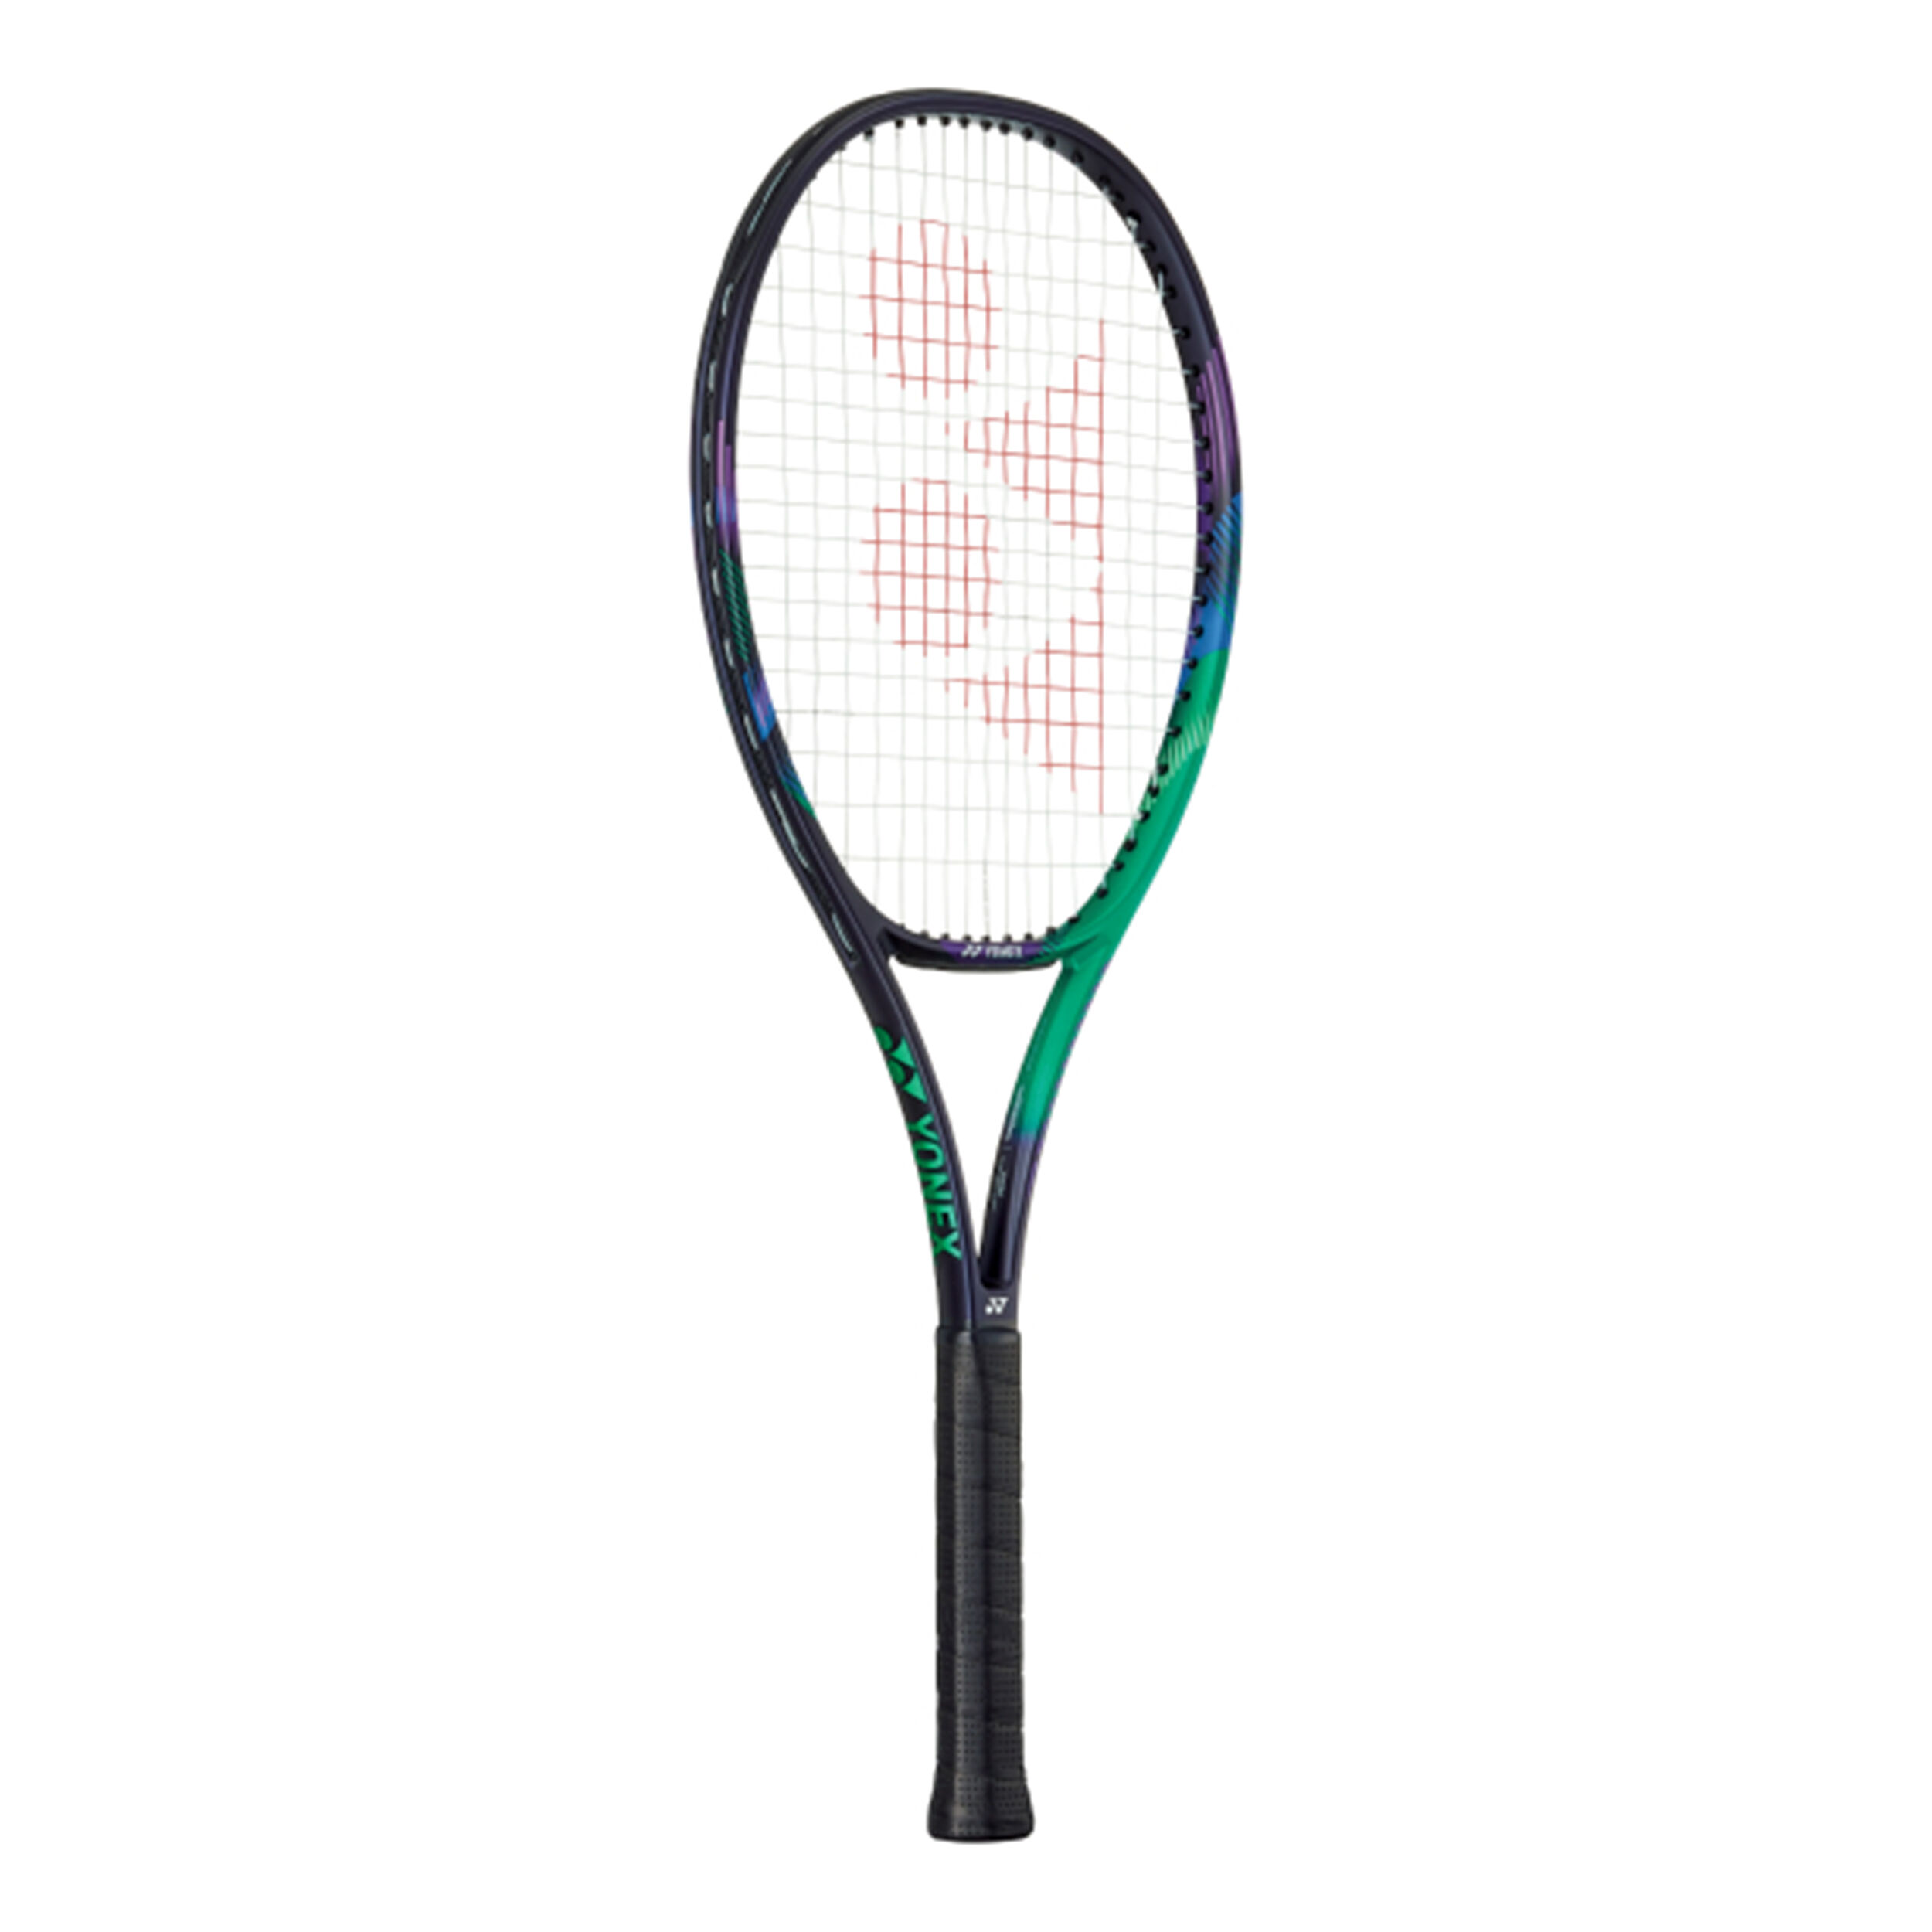 Head graphene 360 Speed Pro raqueta de tenis unbesaitet nuevo PVP 270,00 € 